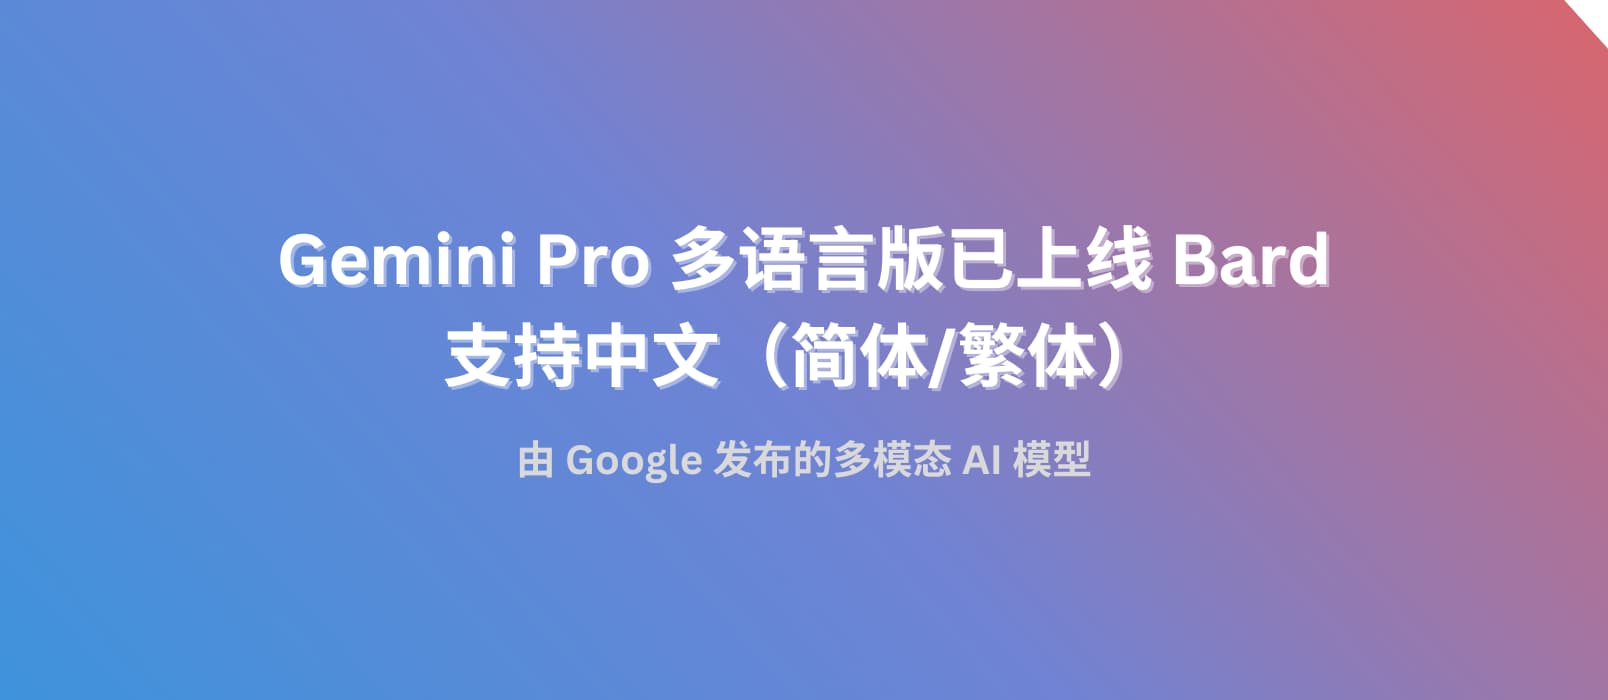 Gemini Pro 多语言版已上线 Bard，支持中文（简体/繁体）